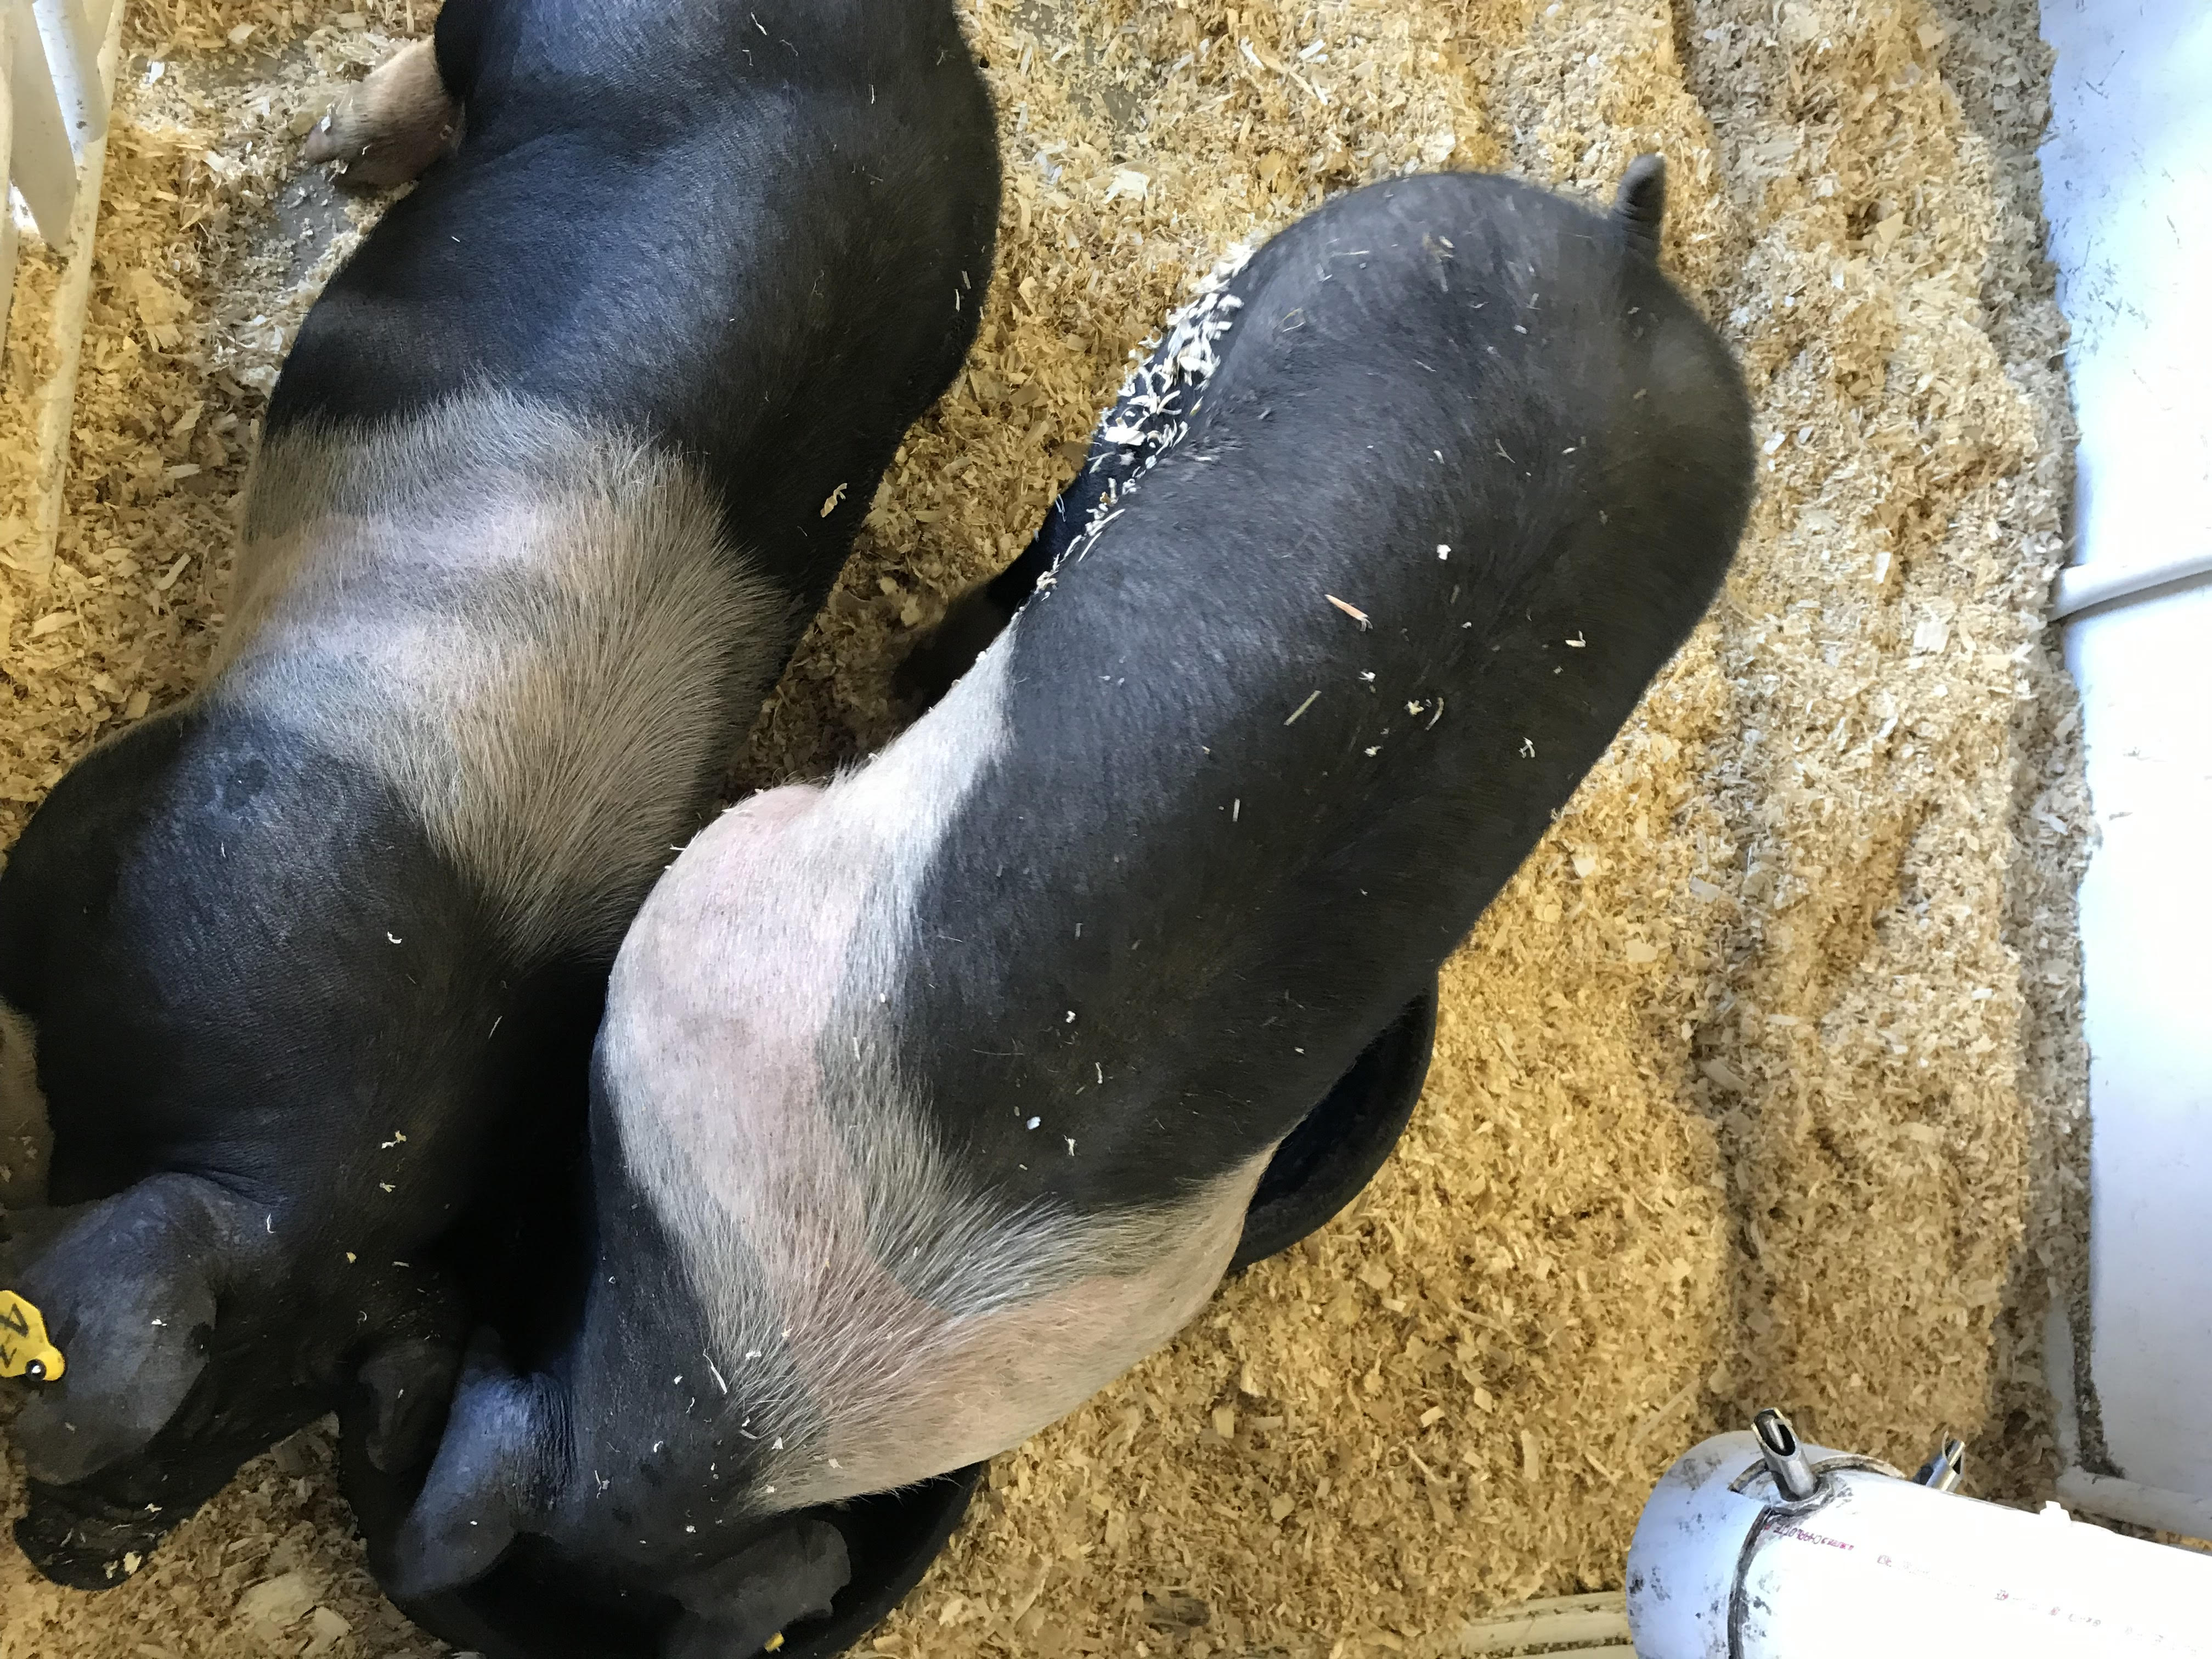 Morning Ag News, November 19, 2021: Study looks at public health impact of hog production